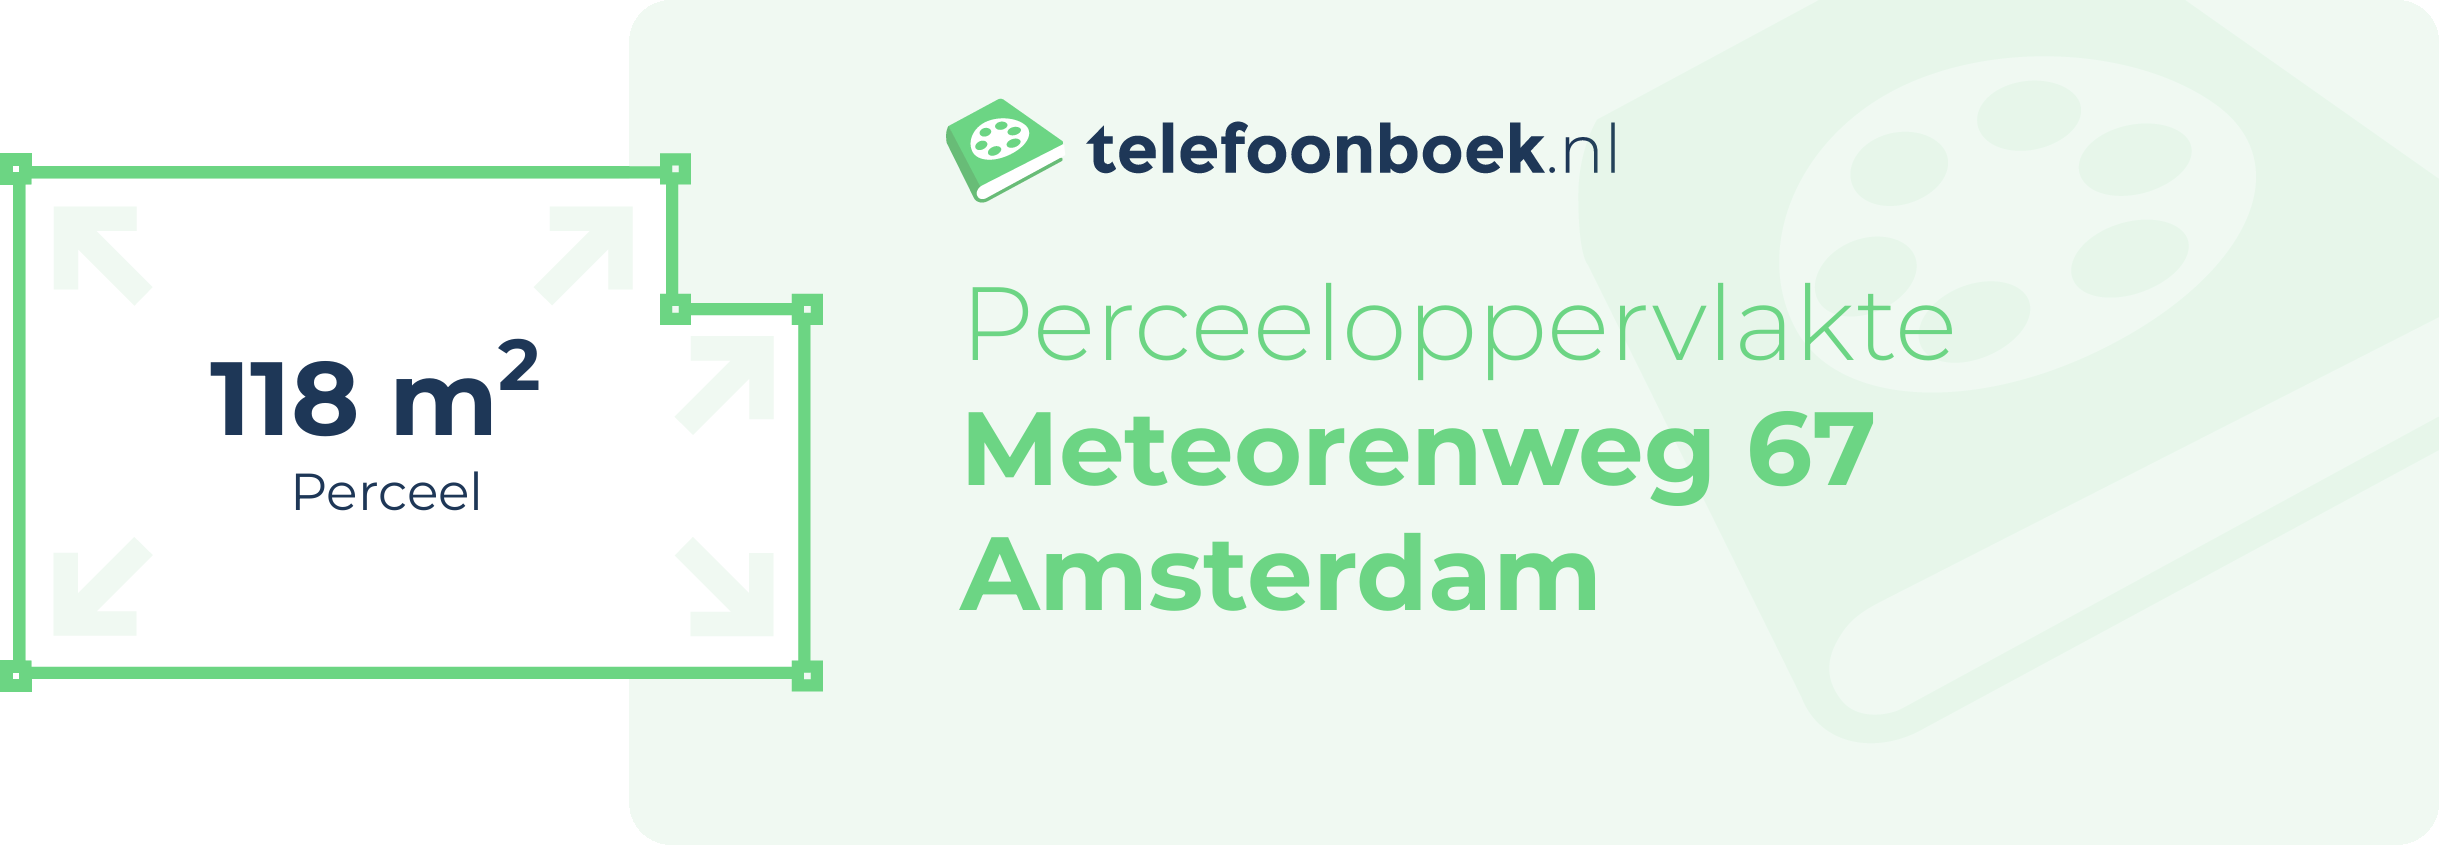 Perceeloppervlakte Meteorenweg 67 Amsterdam